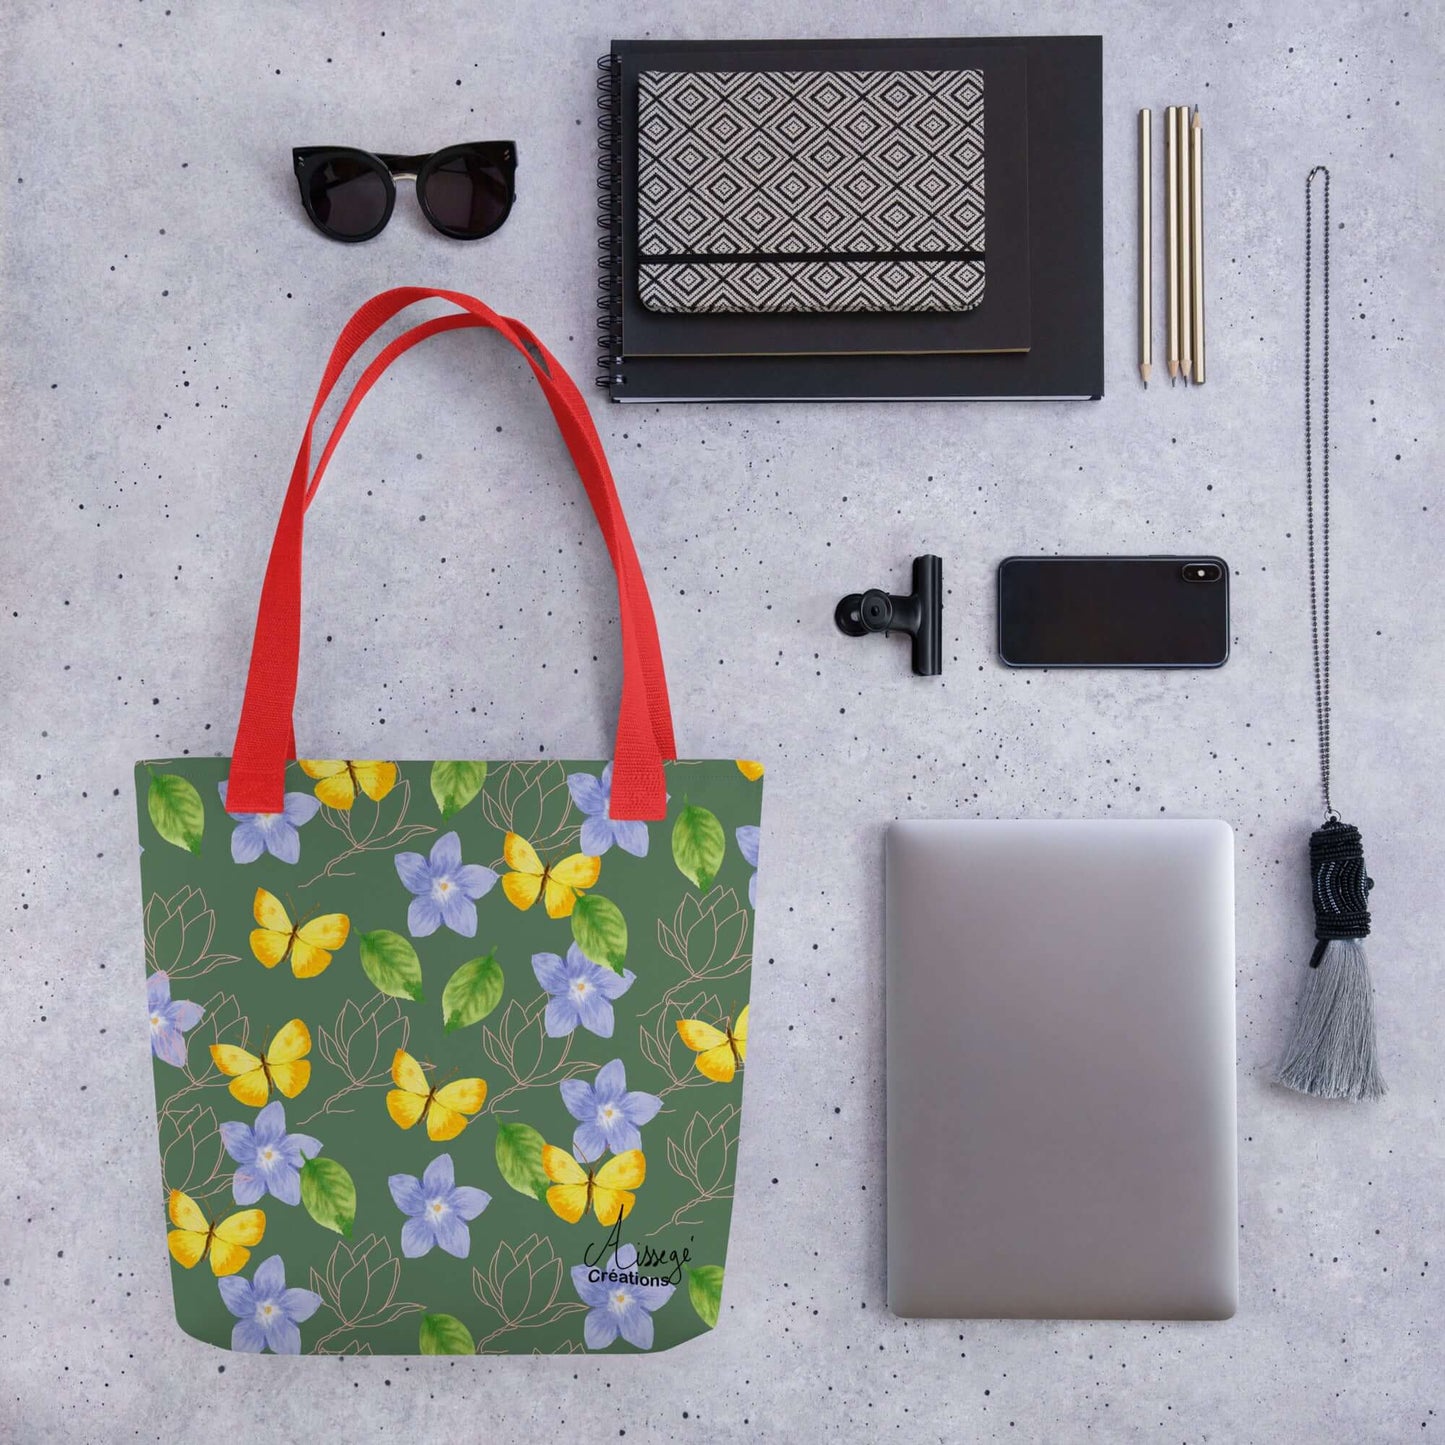 “Green Spring” tote bag